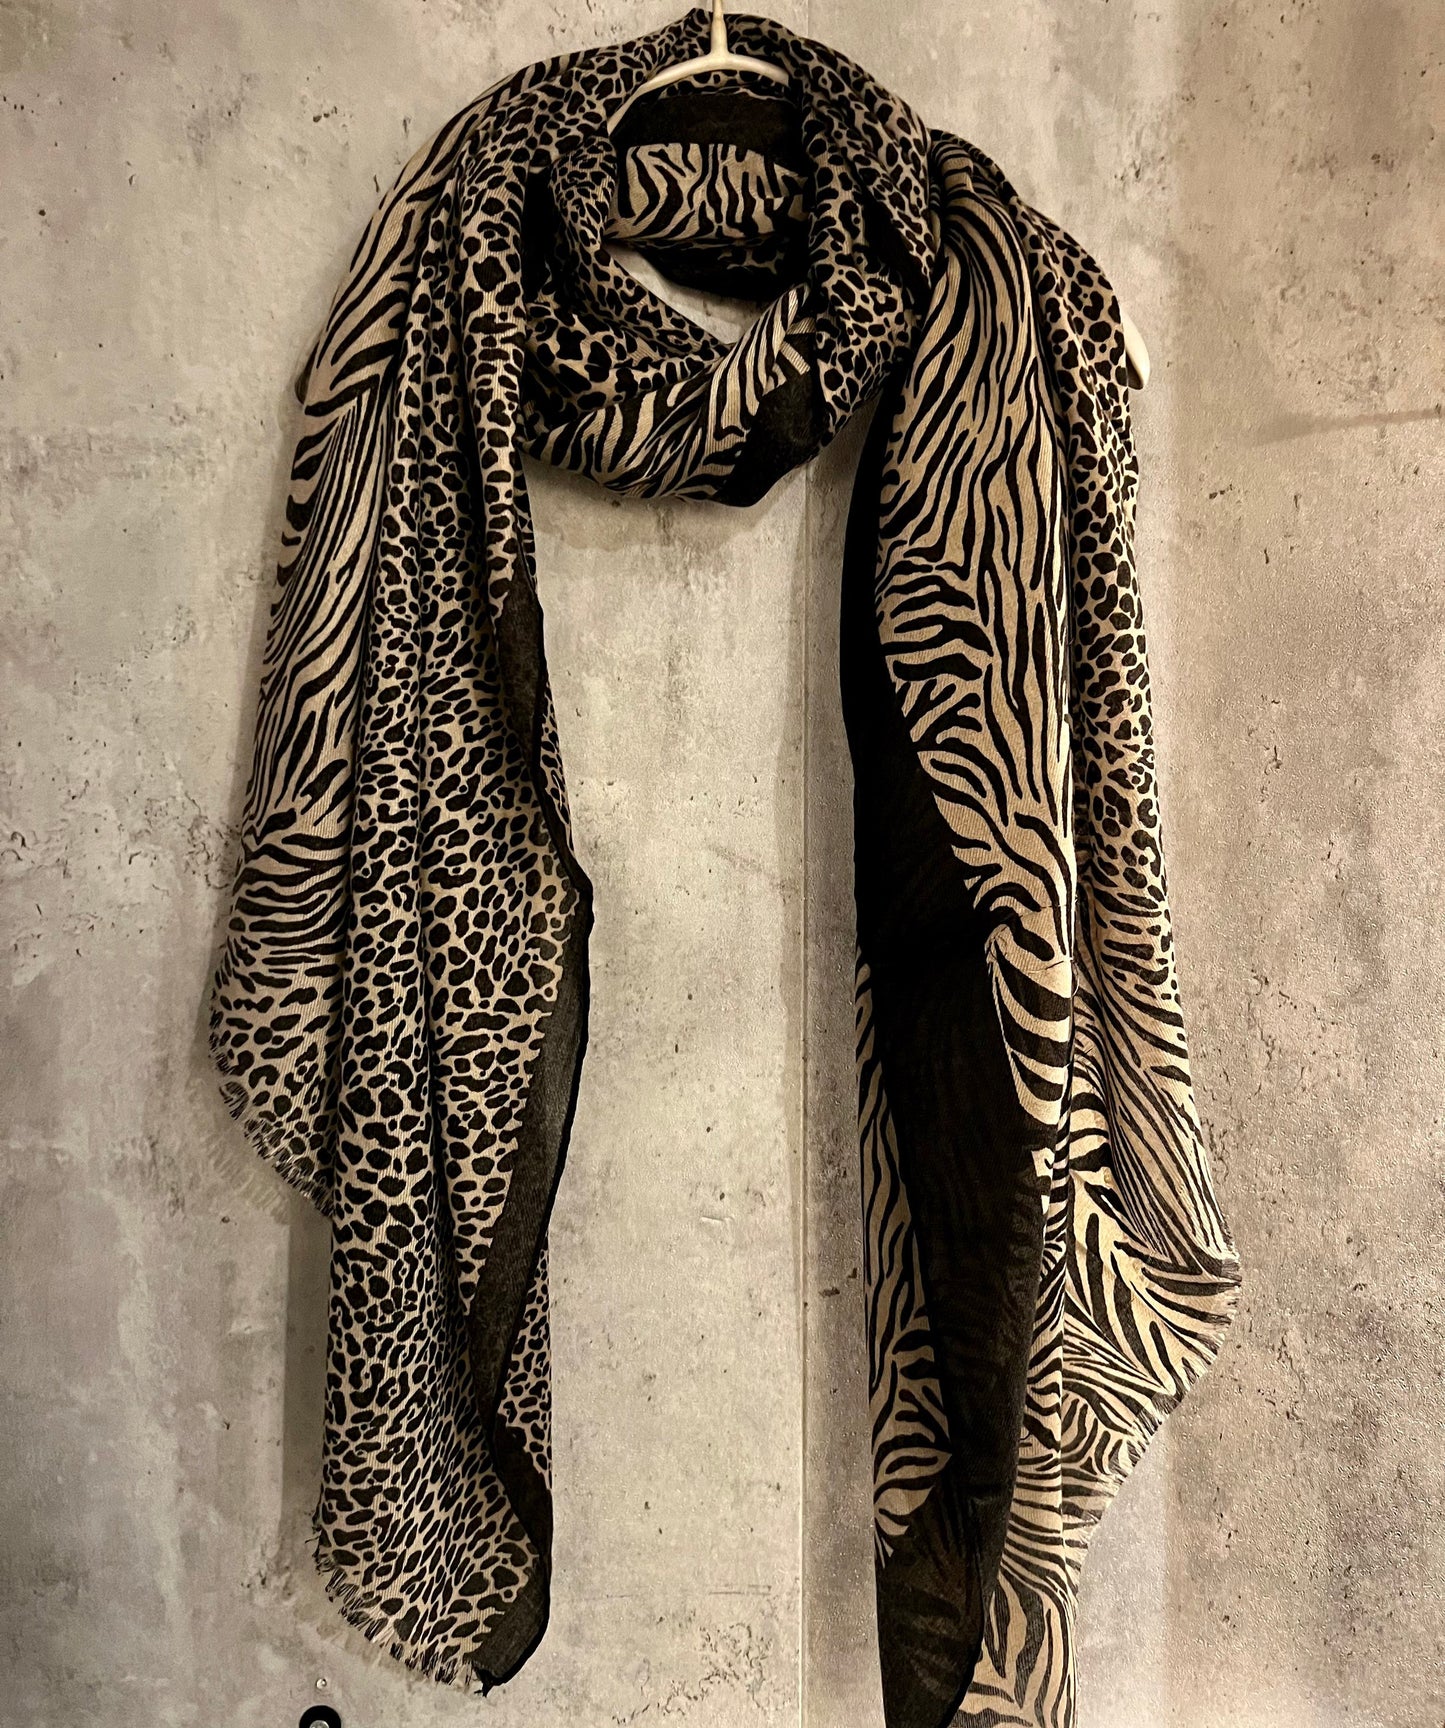 Micro Leopard X Zebra Pattern Pattern Beige Cotton Scarf/Summer Autumn Winter Scarf/Women Scarf/Gifts For Her Birthday Christmas/UK Seller